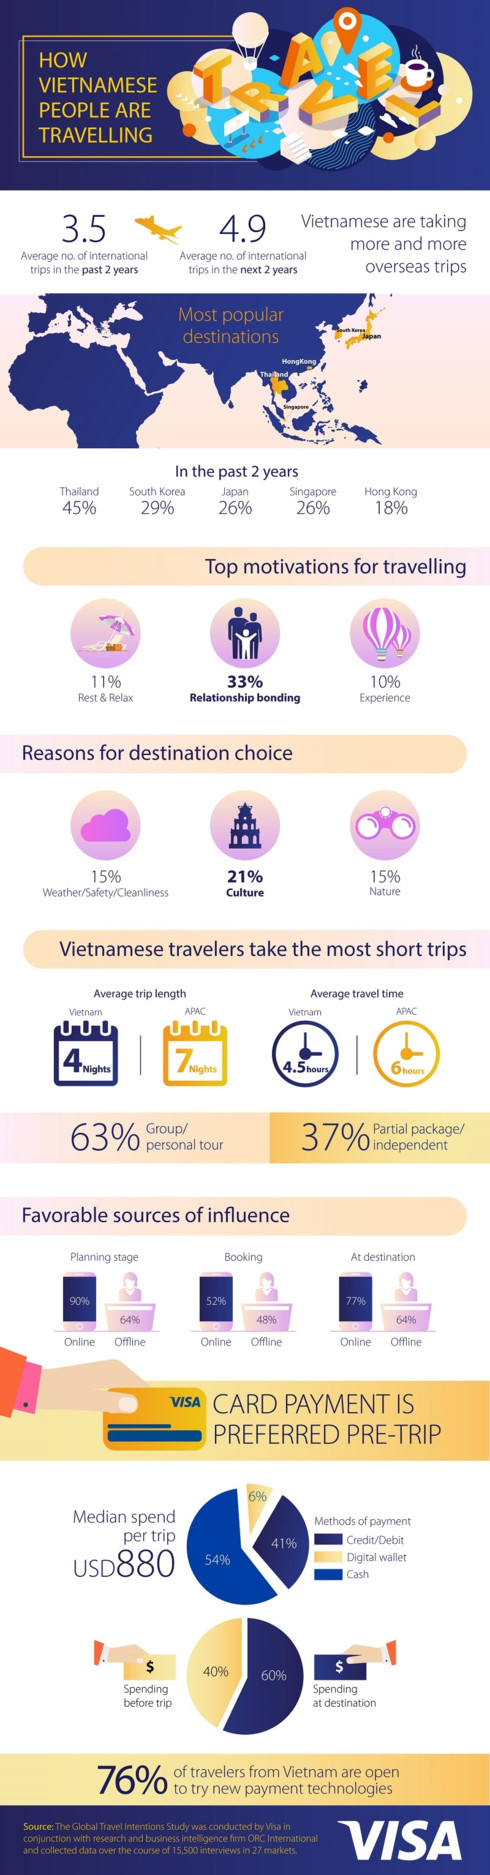 Vietnamese people expected to travel and spend more, travel news, Vietnam guide, Vietnam airlines, Vietnam tour, tour Vietnam, Hanoi, ho chi minh city, Saigon, travelling to Vietnam, Vietnam travelling, Vietnam travel, vn news